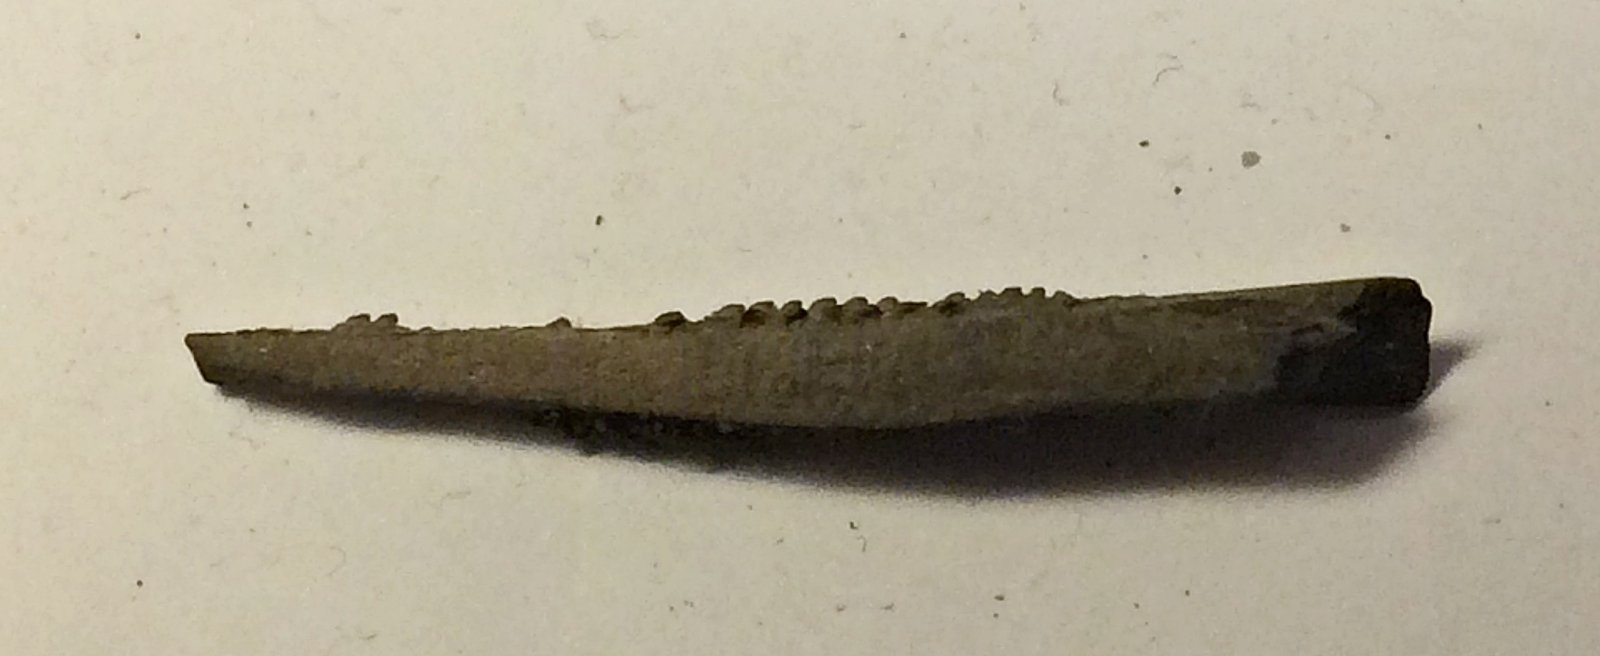 Ratfish Spine from Big Brook, N.J.IMG_7858